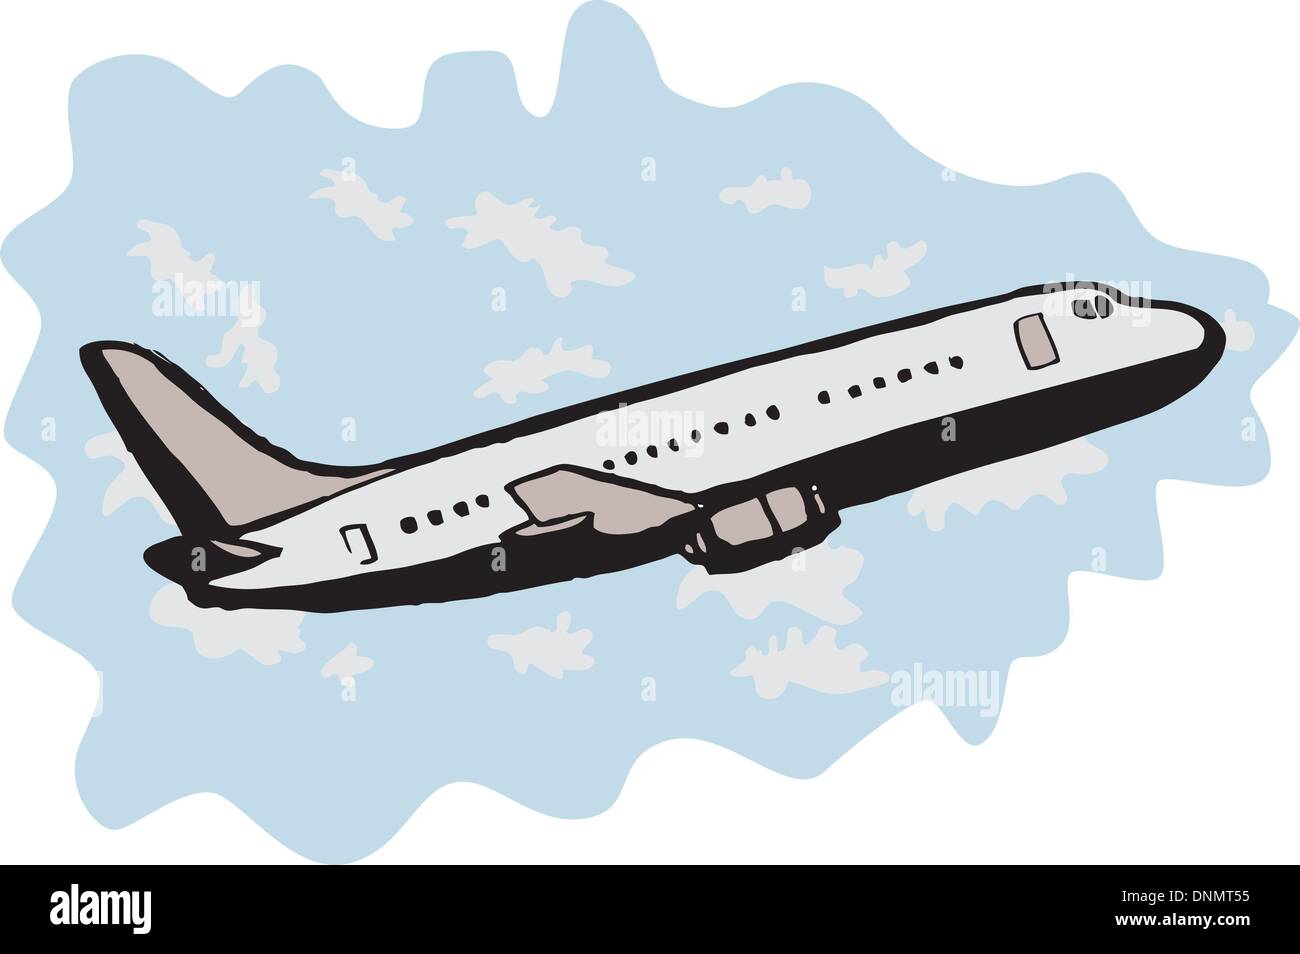 illustration of a commercial passenger jumbo jet airplane taking off Stock  Vector Image & Art - Alamy